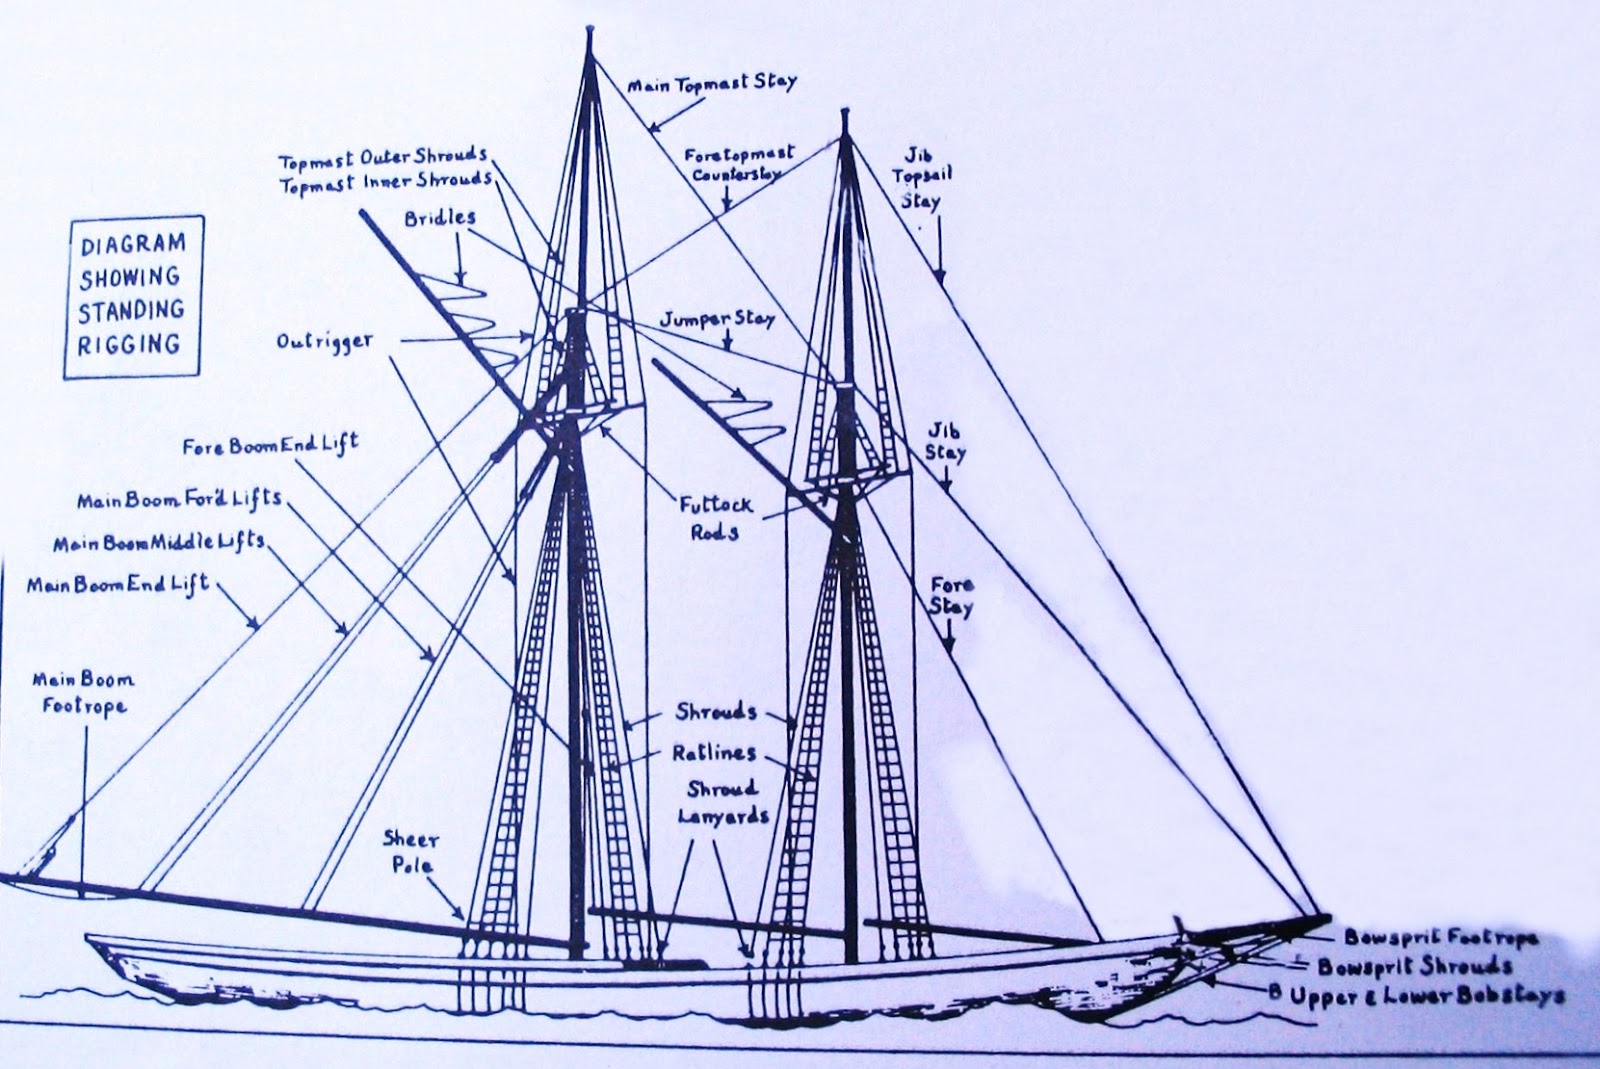 ketch rigging diagram